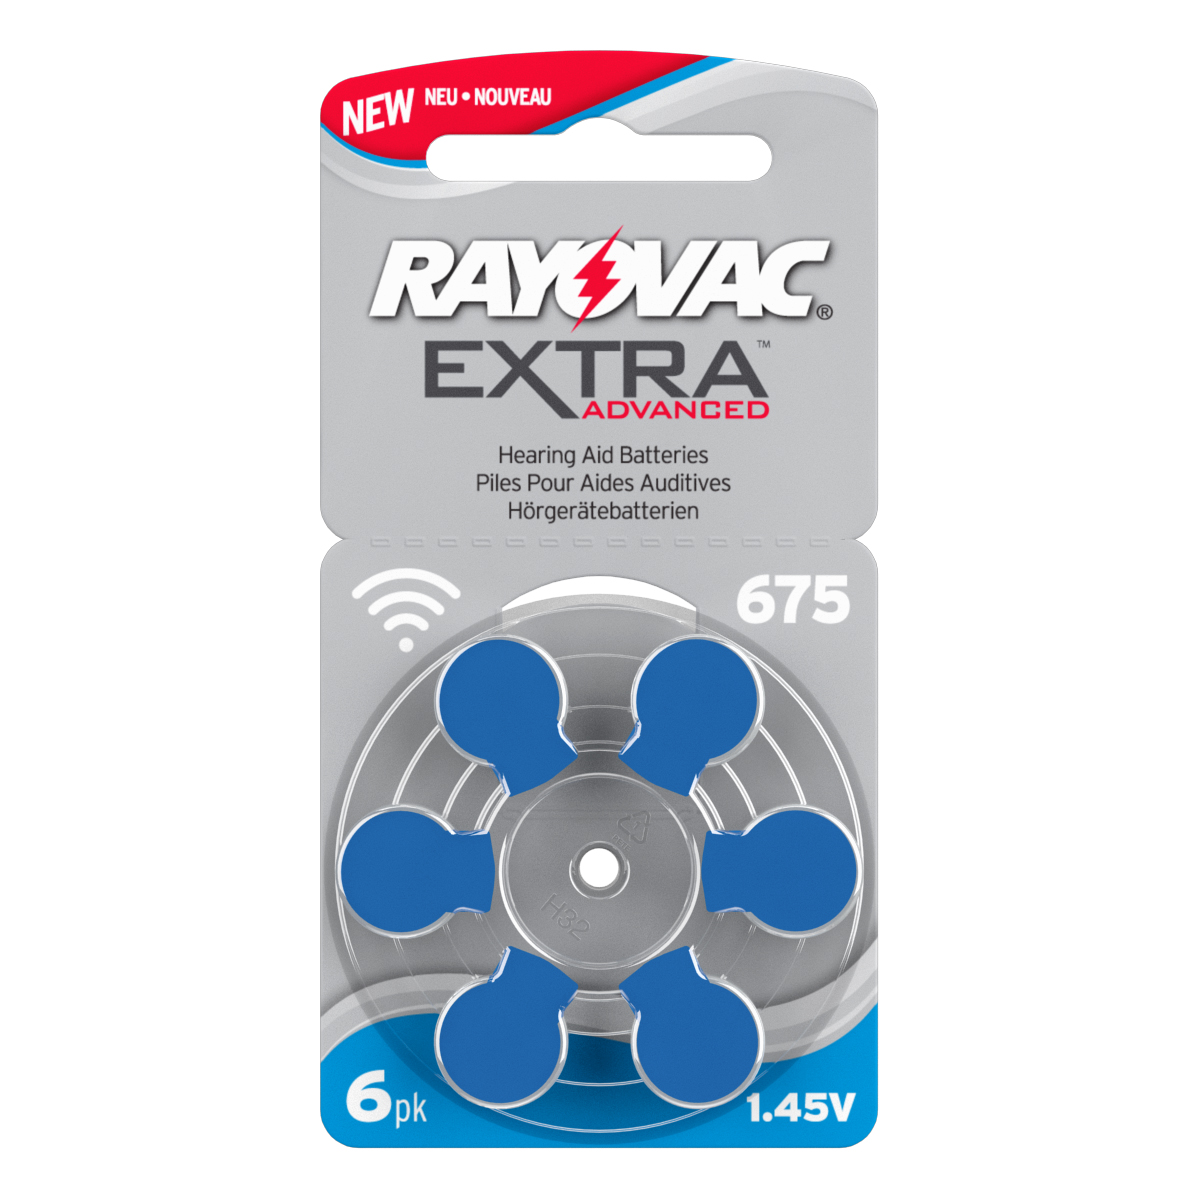 Rayovac Extra Advanced 60 pack Size 675 